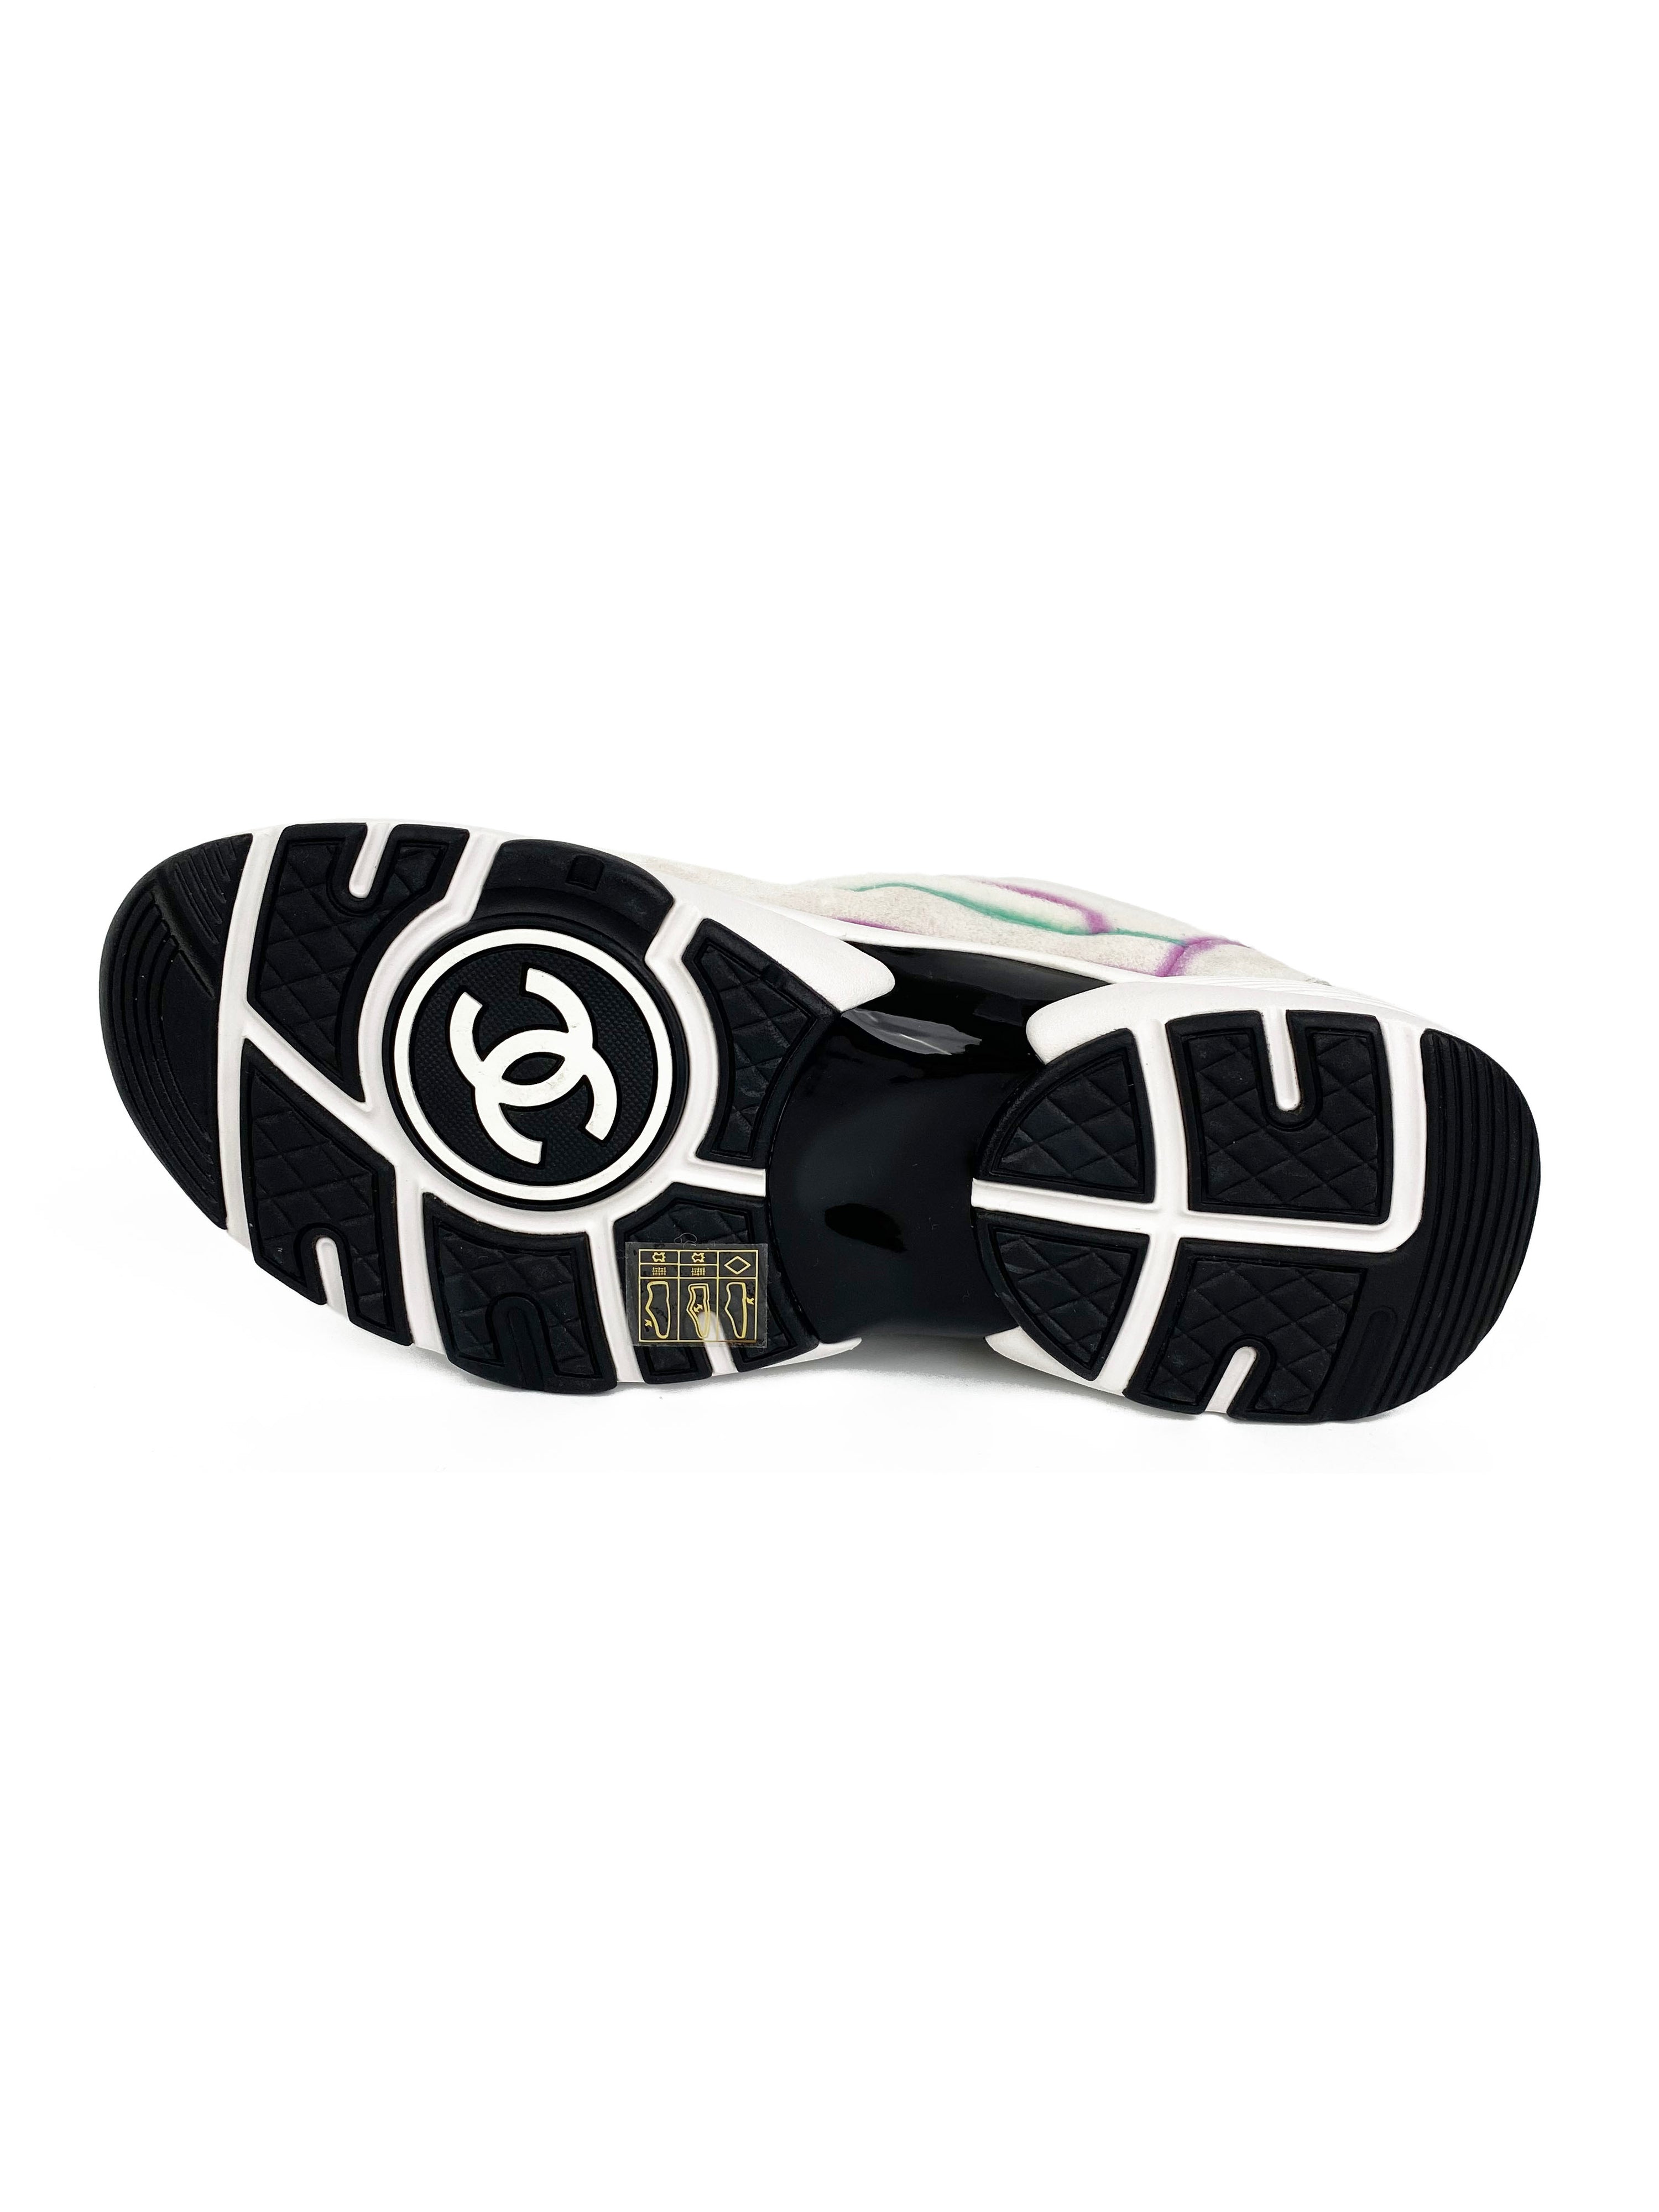 Chanel White & Multicolour Suede Sneakers 38